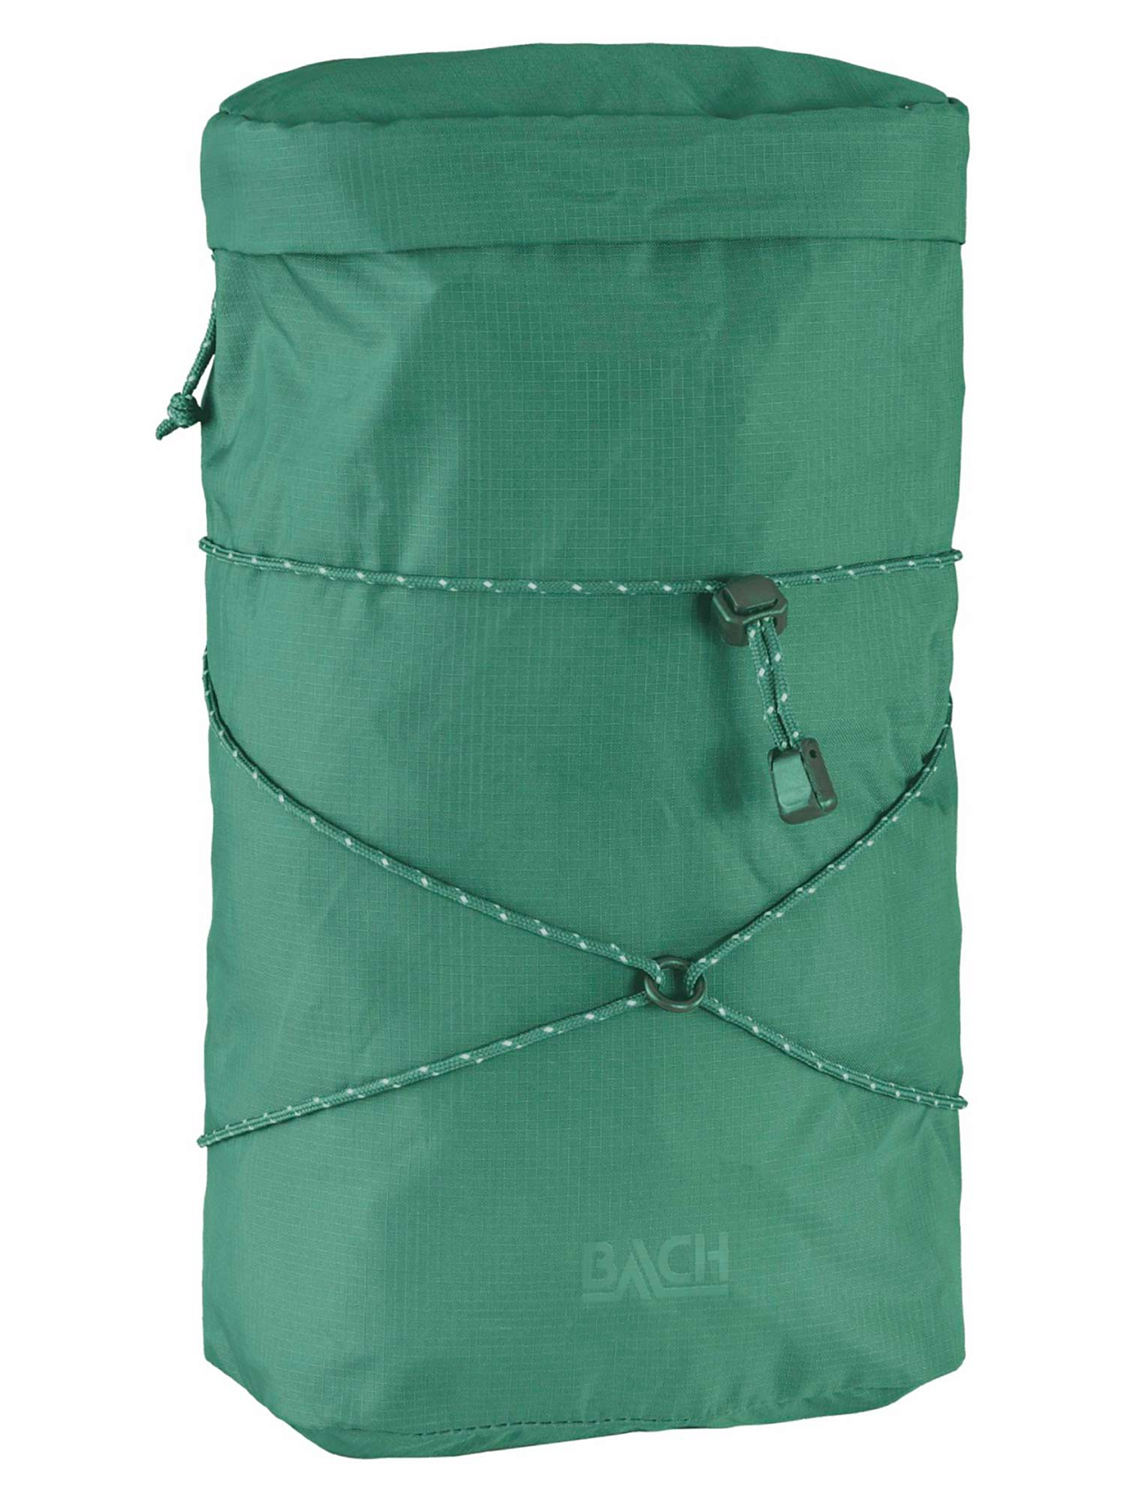 Съемный карман BACH Pocket Side Compression Pine Green